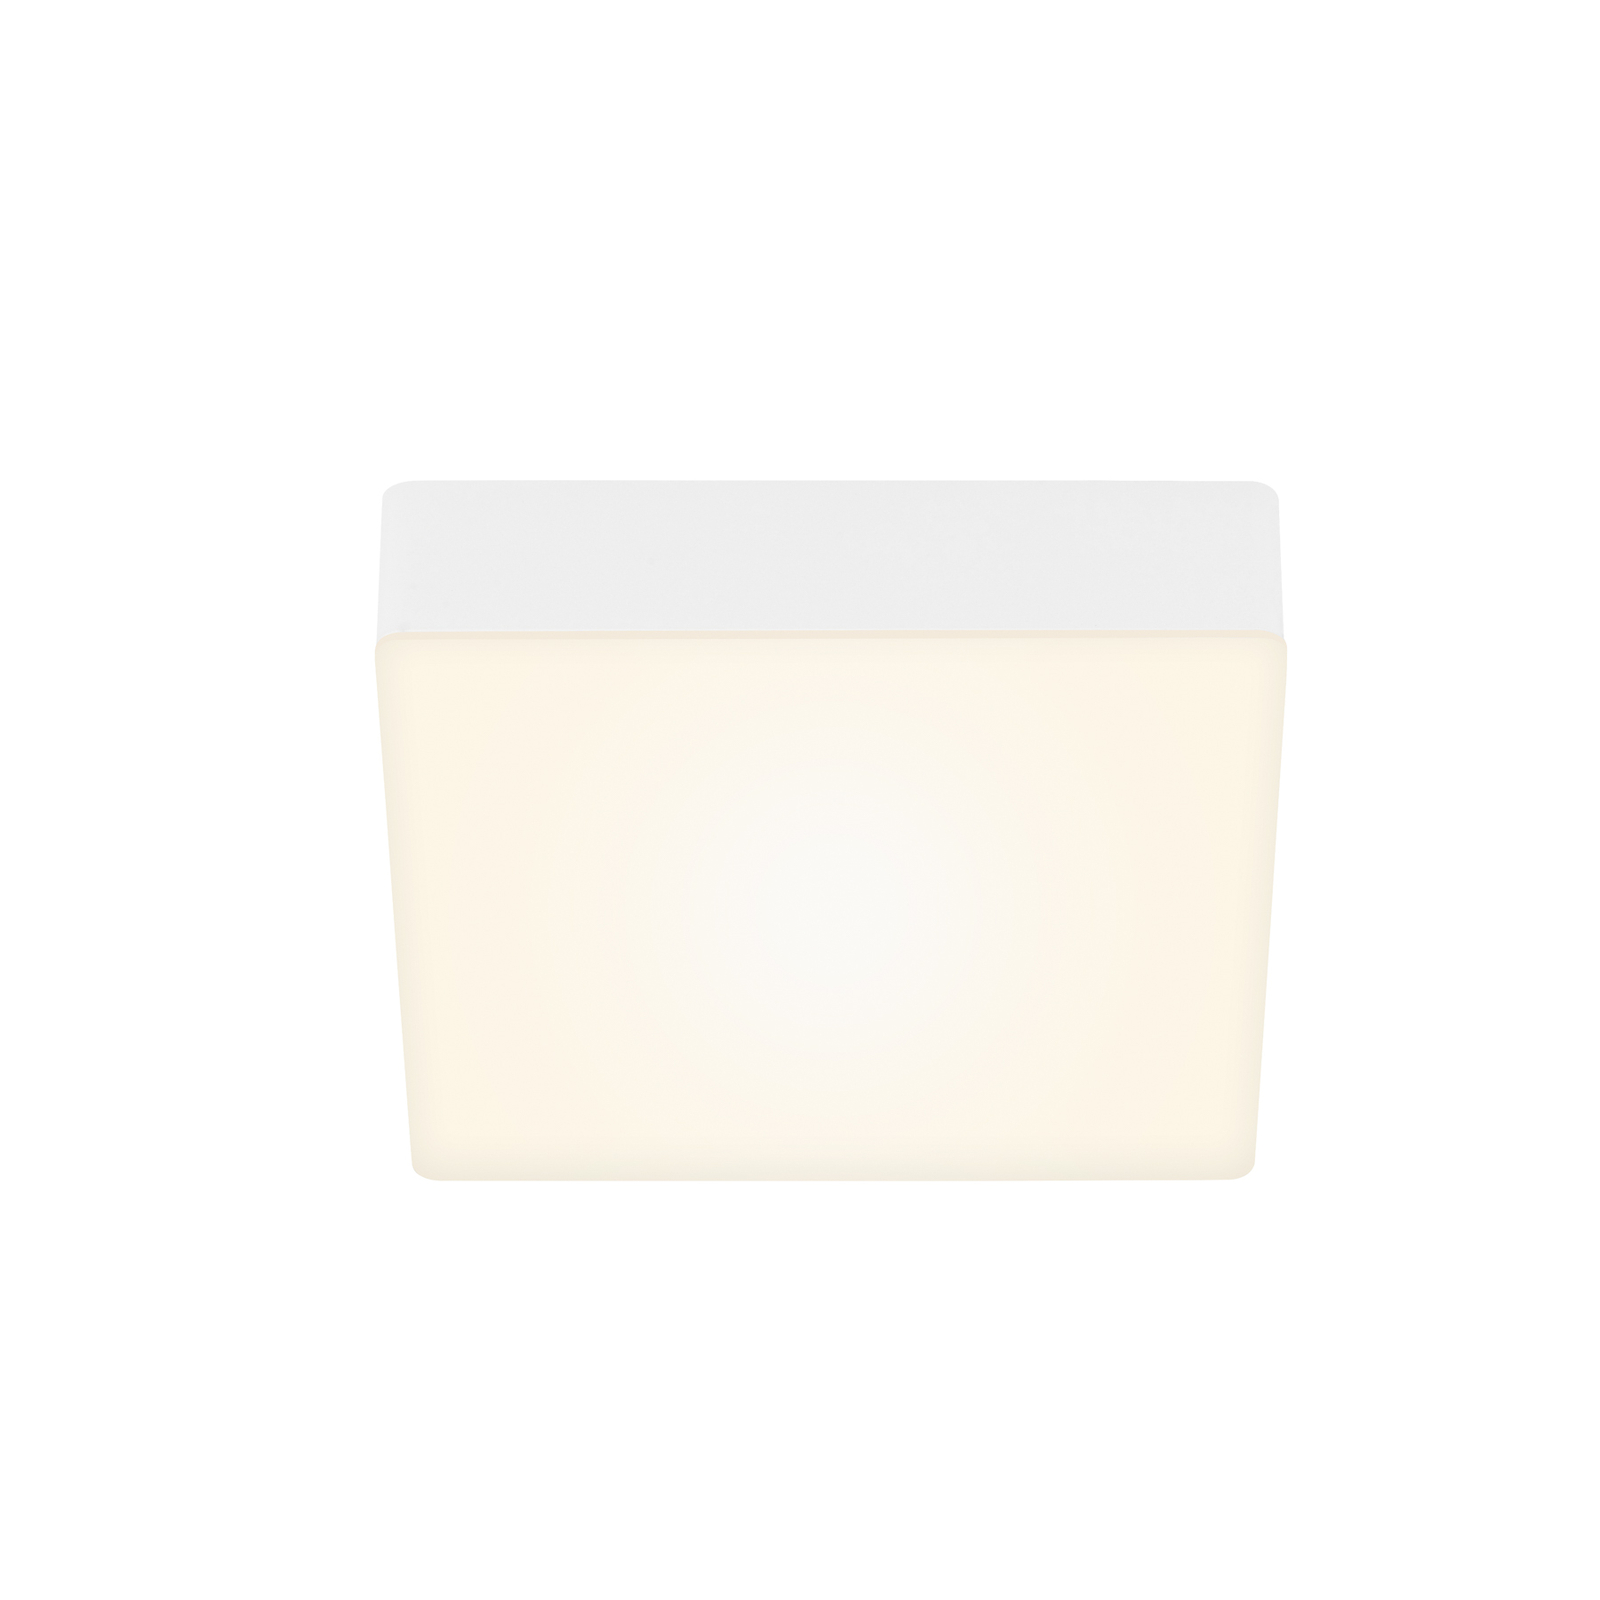 Stropné svietidlo Flame LED, 15,7 x 15,7 cm, biele